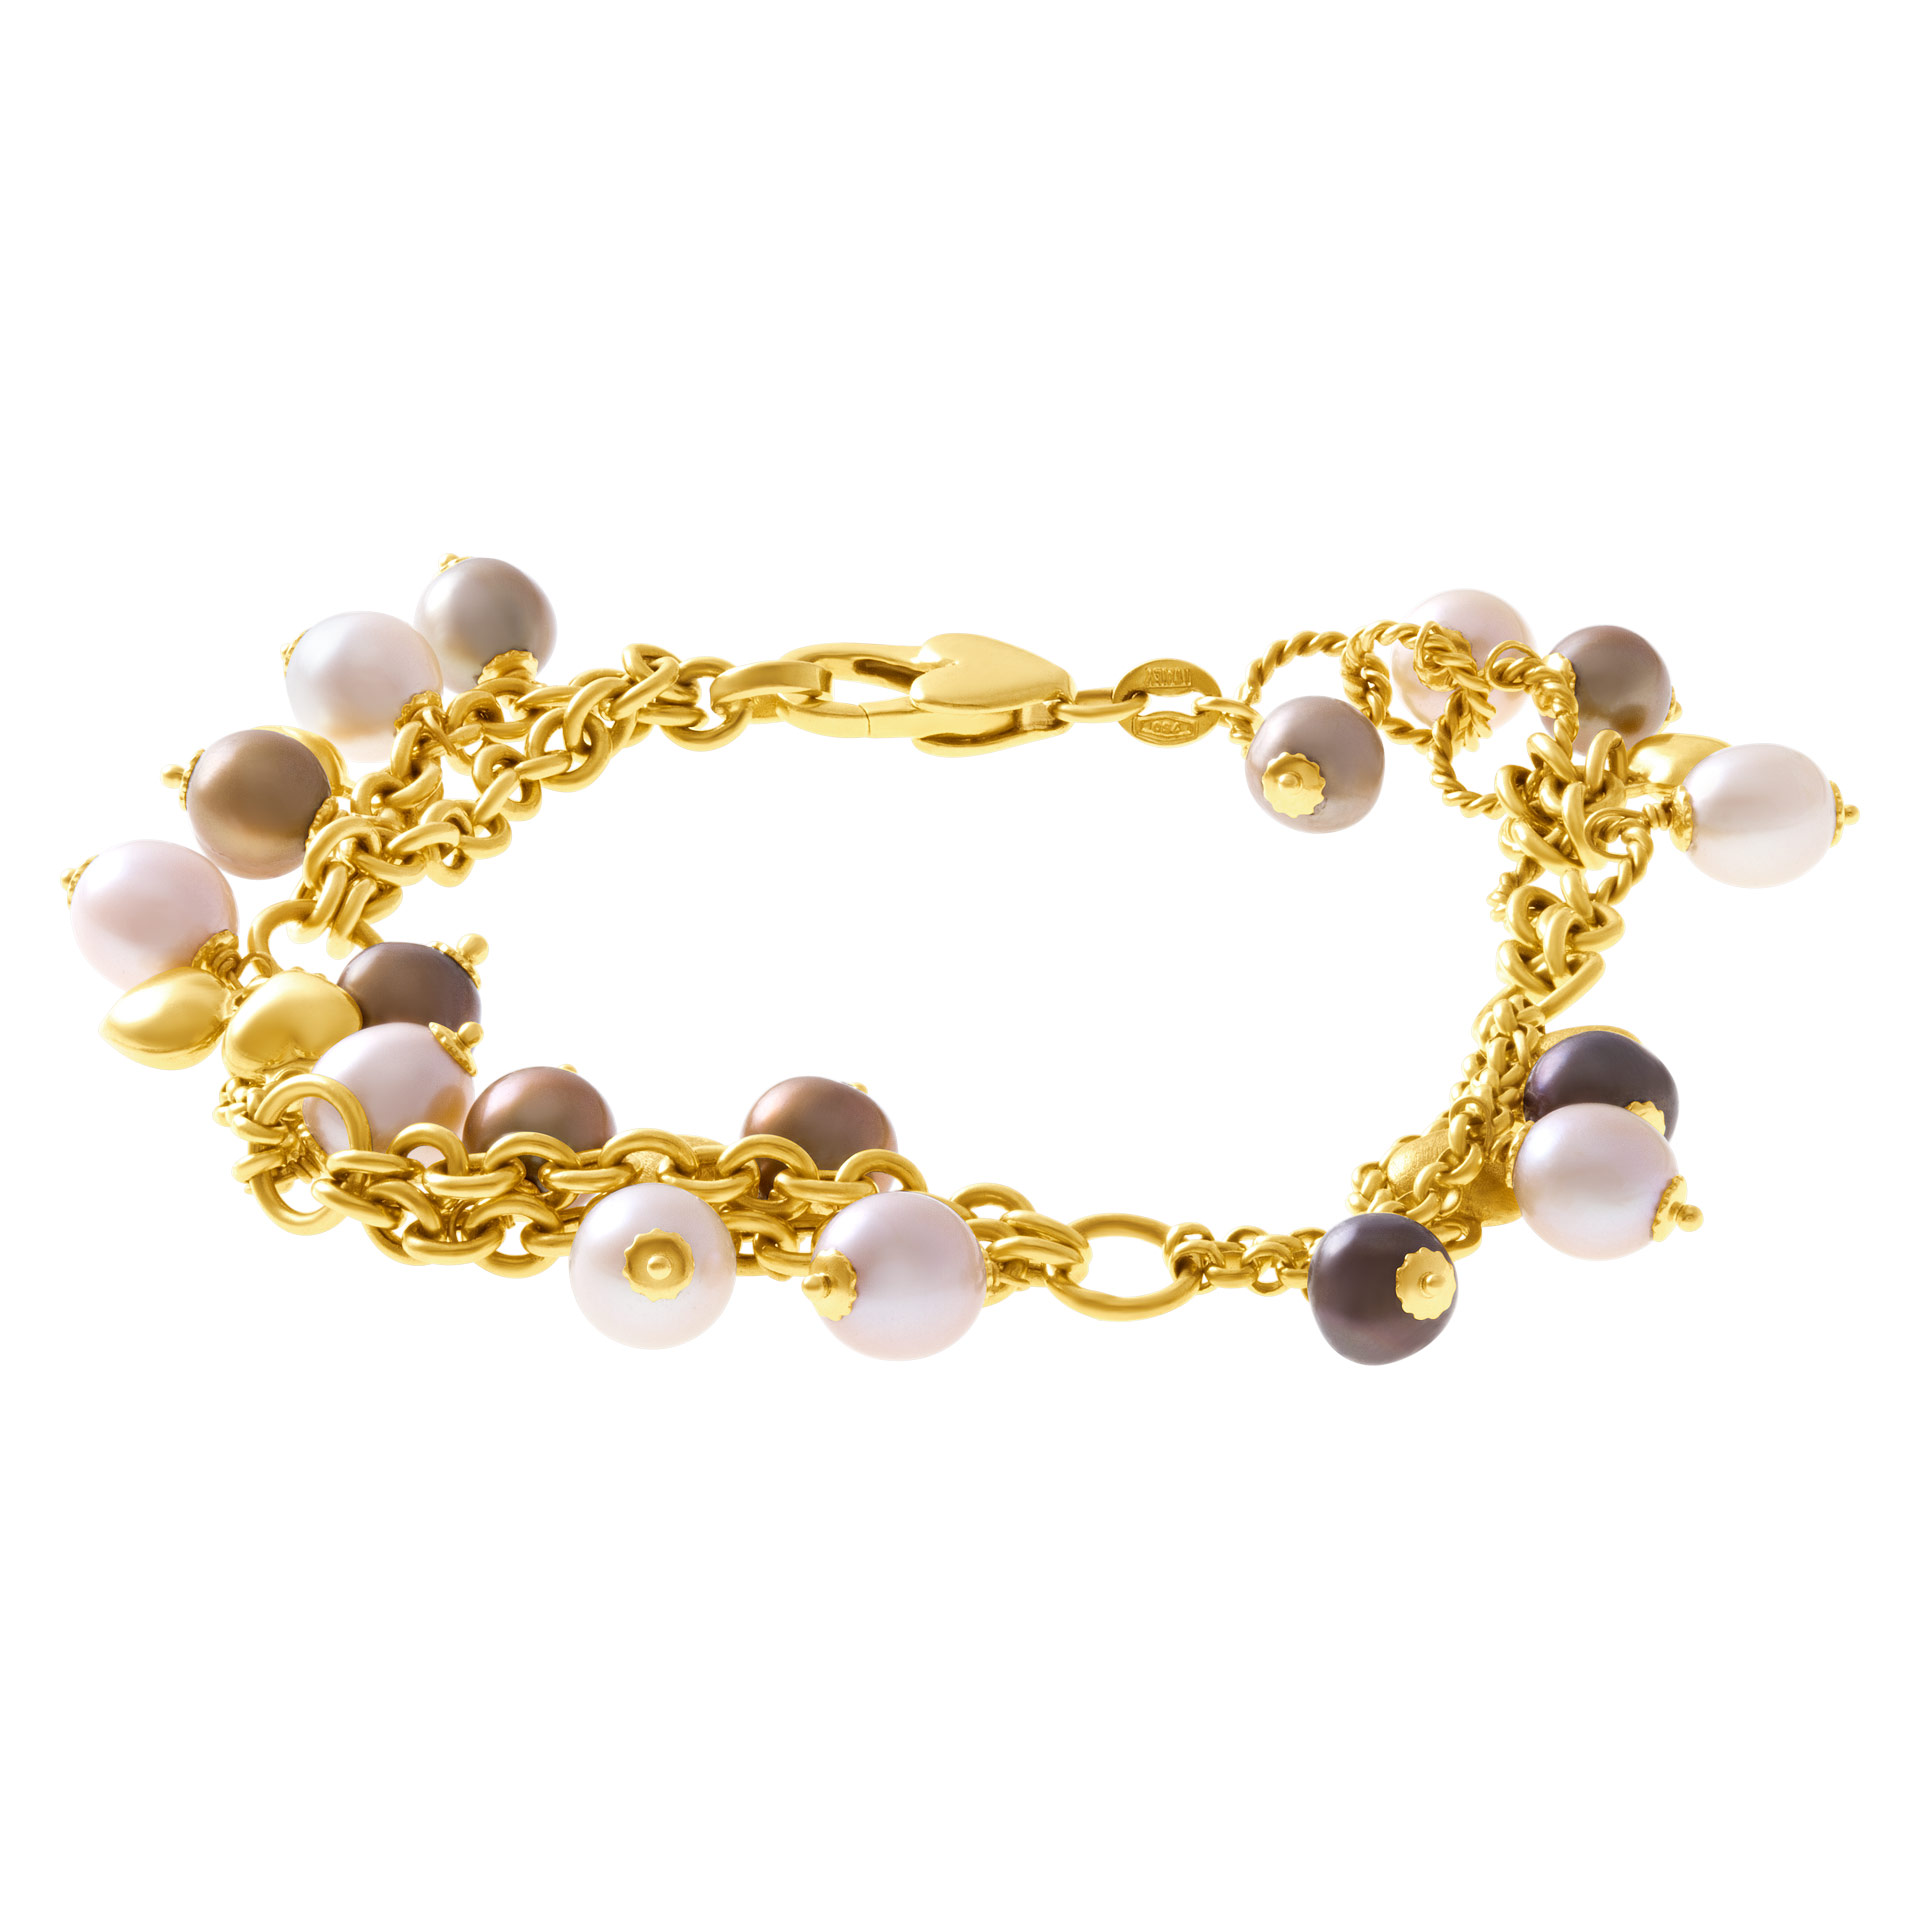 Beautiful pearl bracelet set in 18k yellow gold